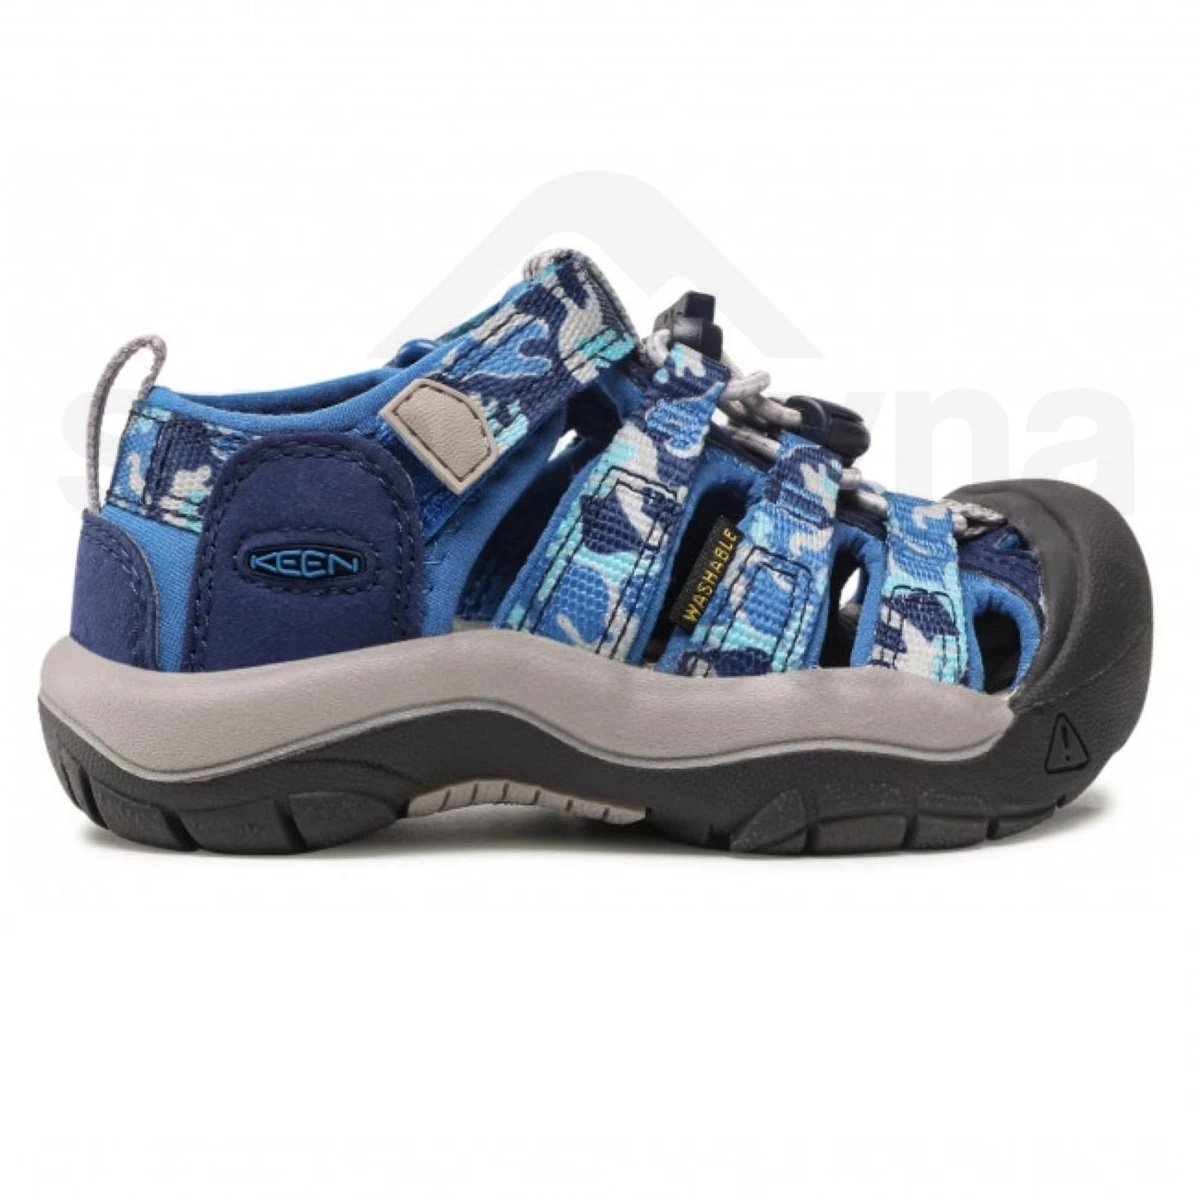 Взуття дитяче Keen Newport H2 K - світло-блакитне/темно-сине